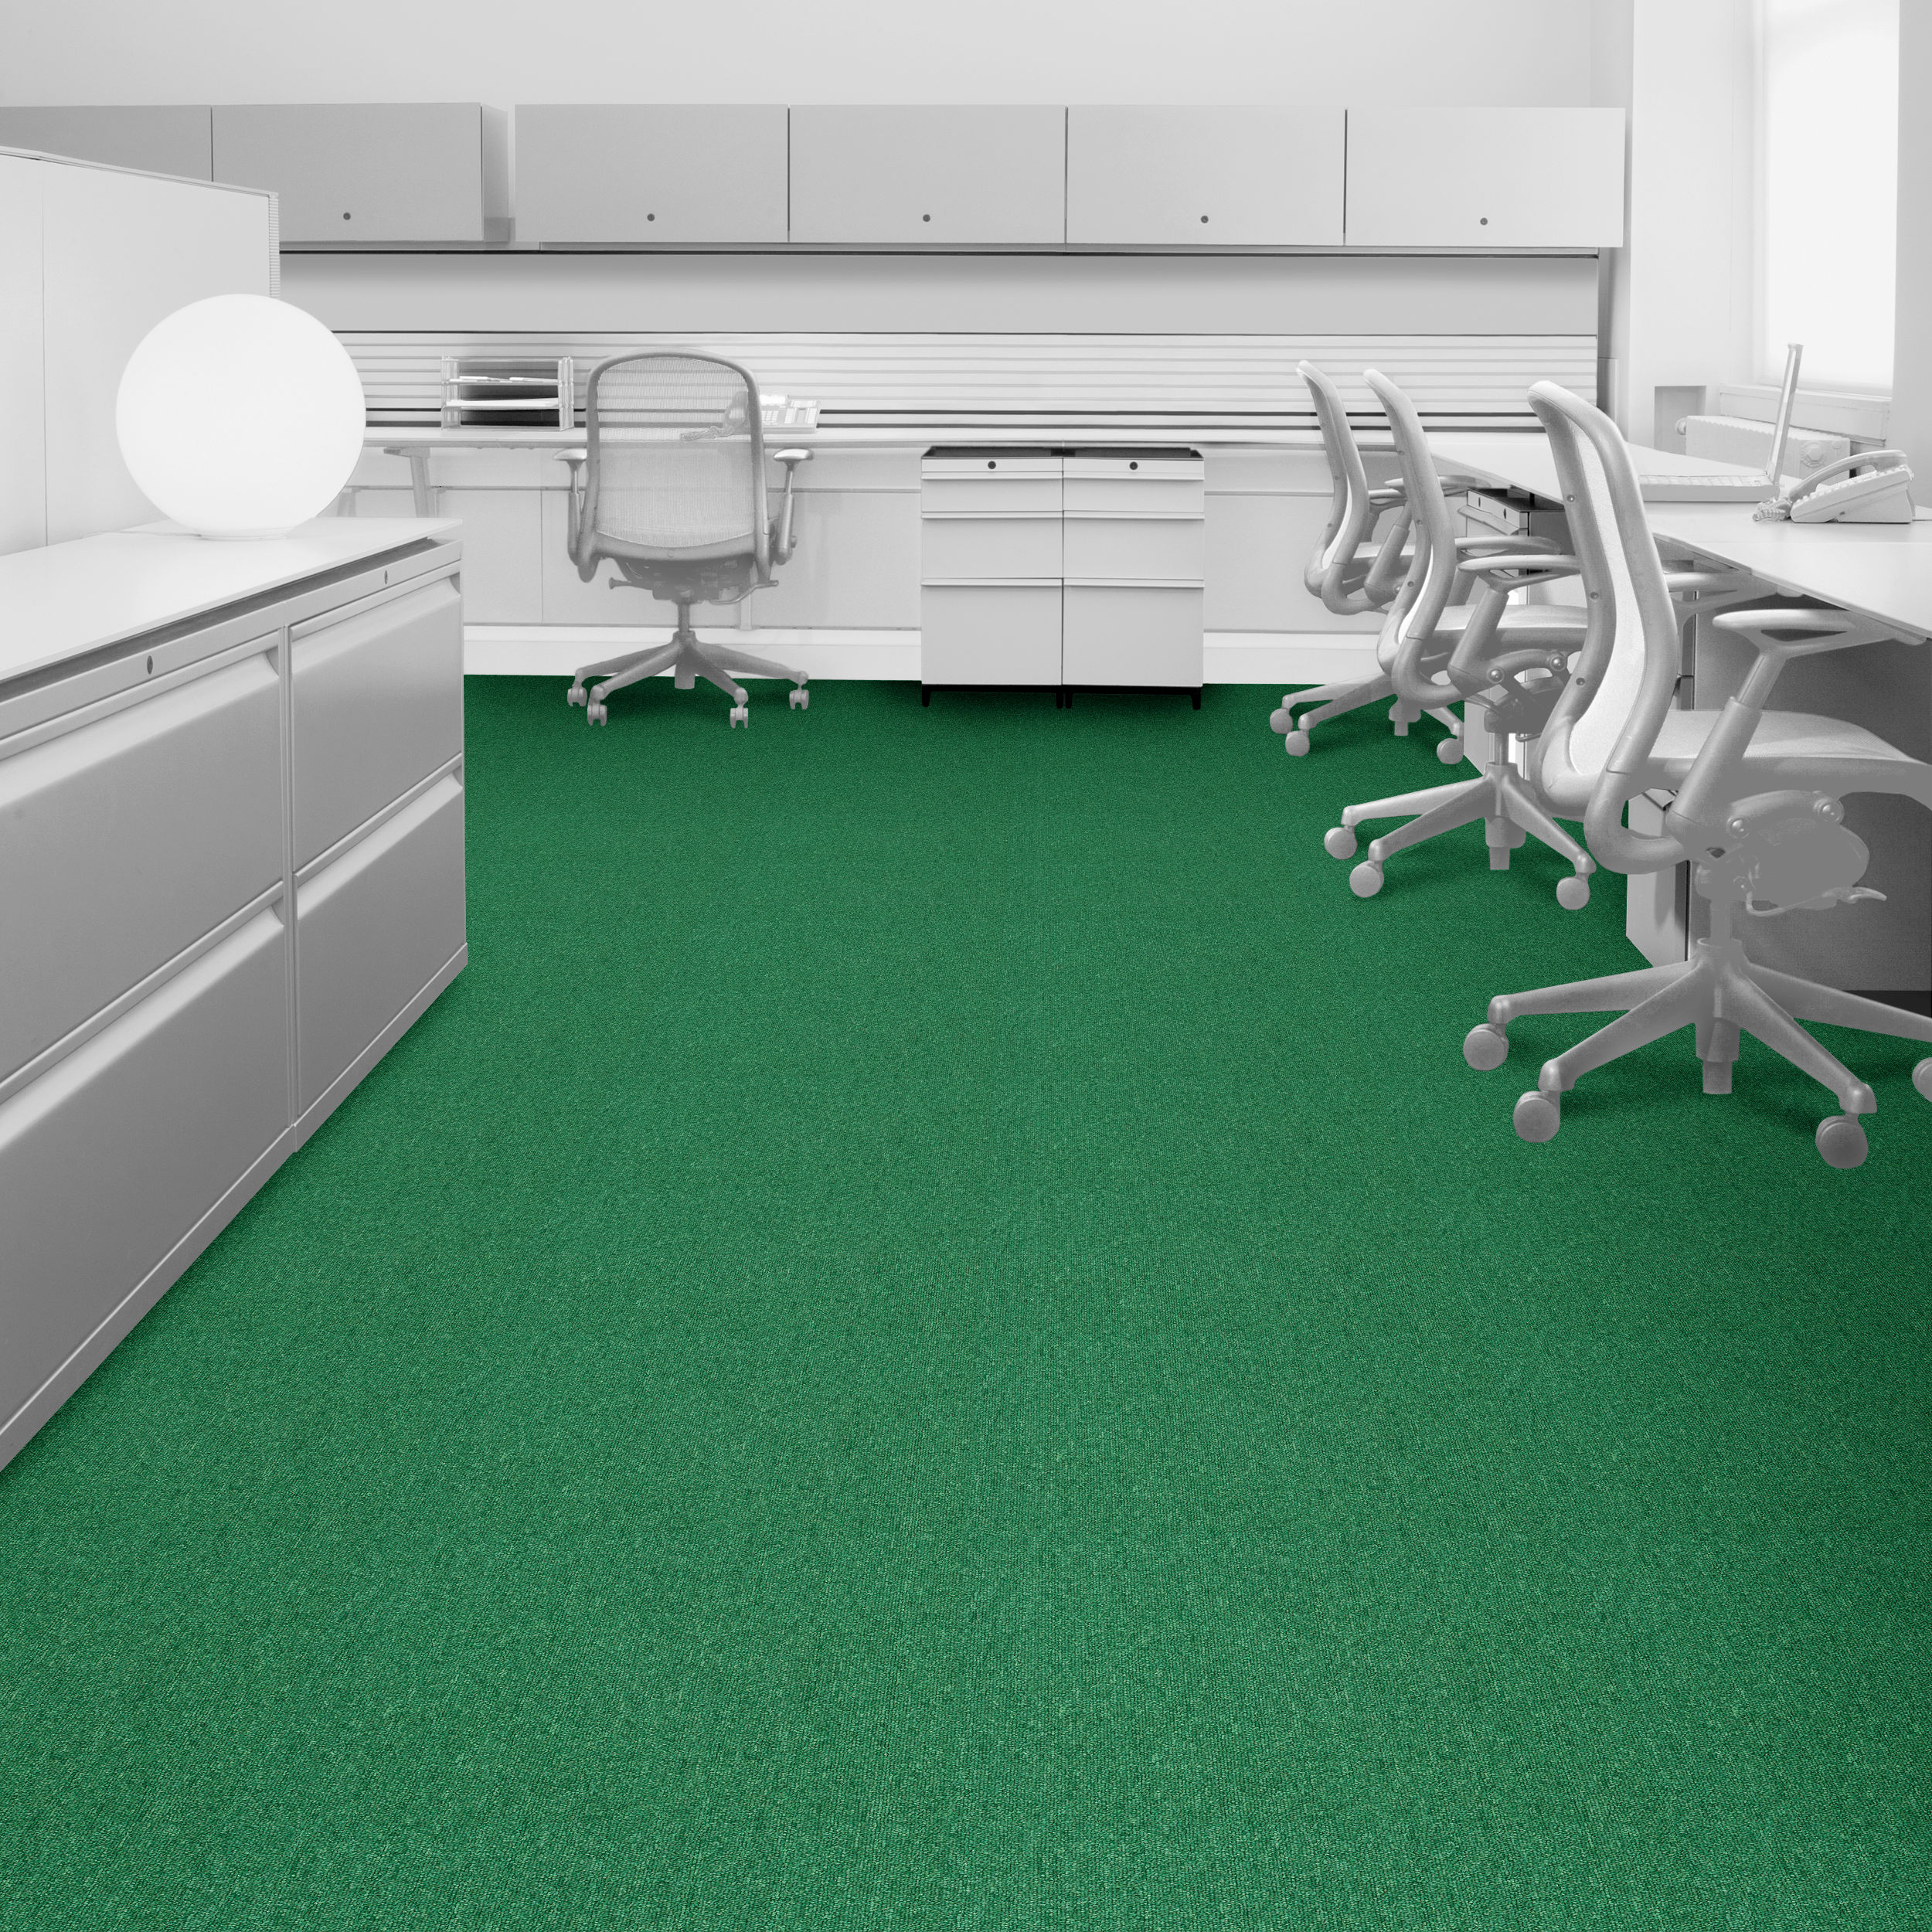 Interface Heuga 580 Carpet Tile - Green variation in office setting.